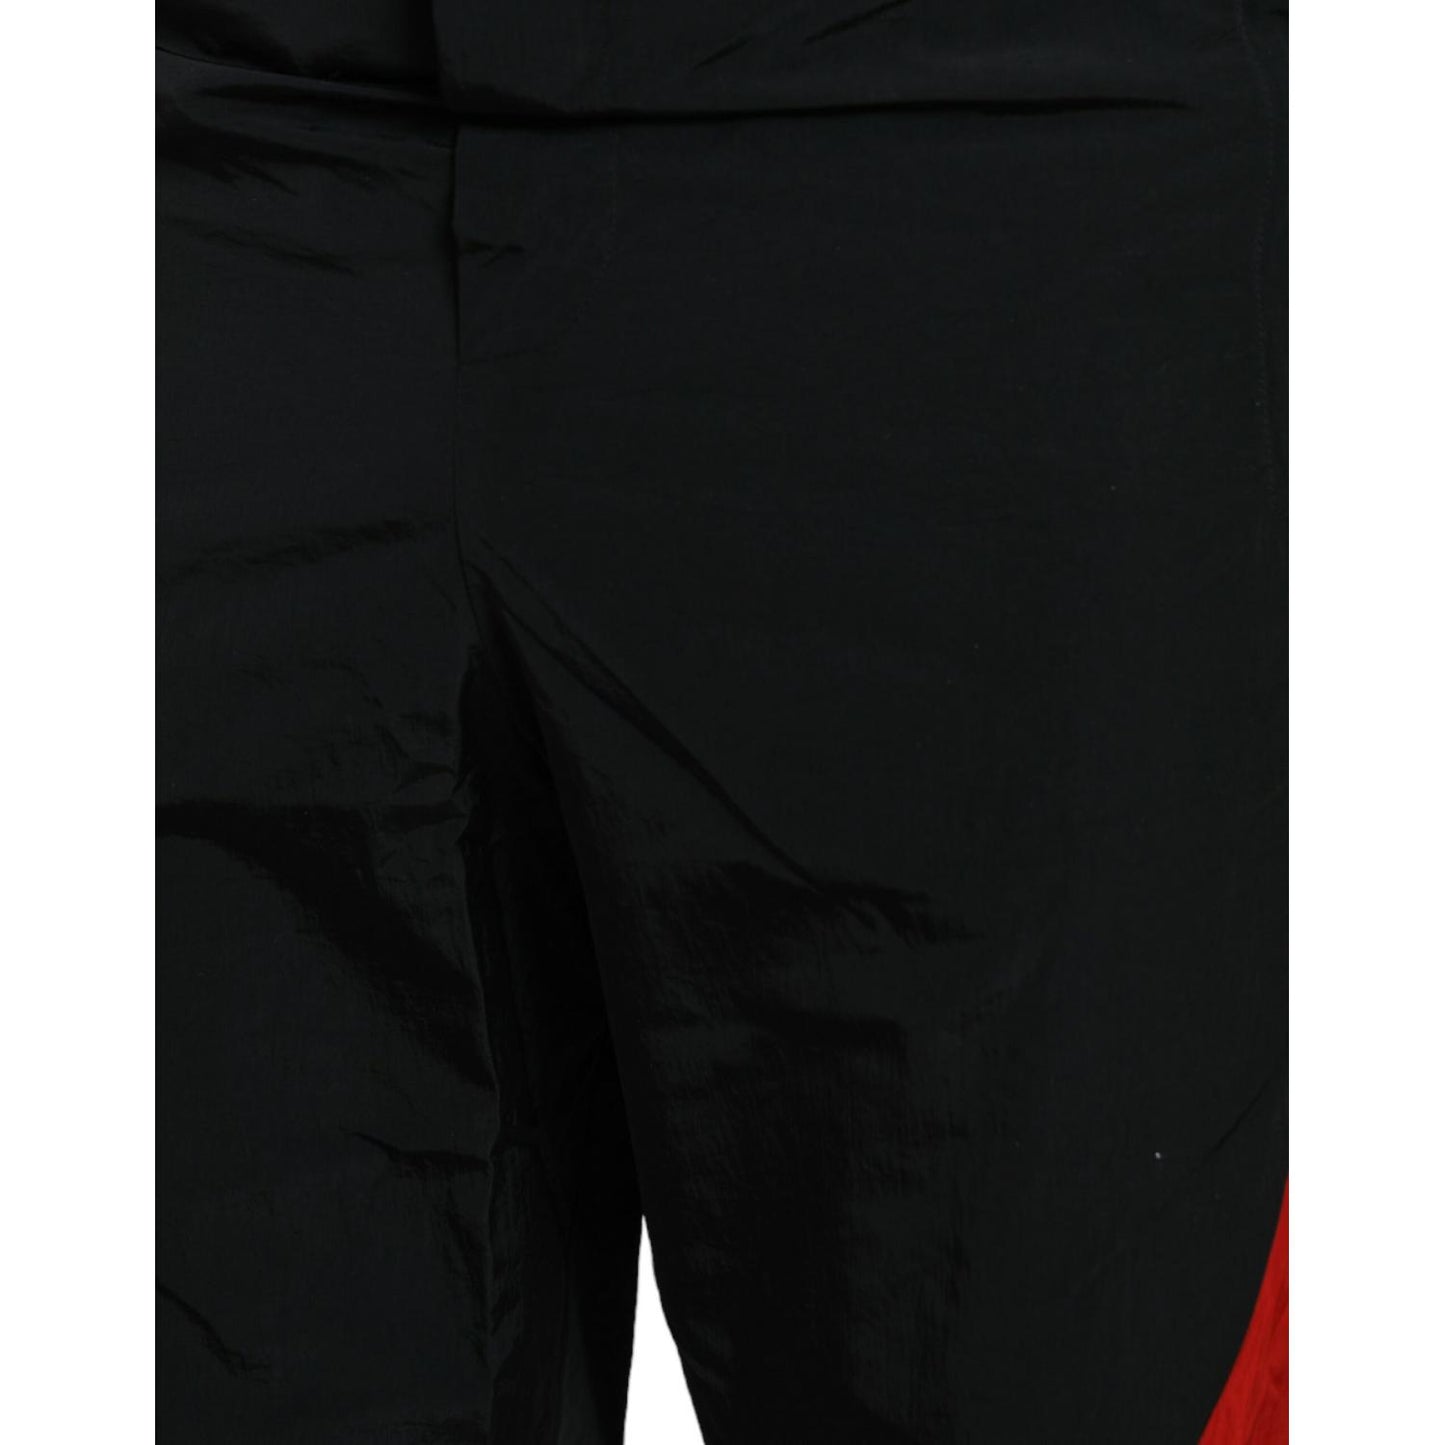 Dolce & Gabbana Black Red Leopard Print Nylon Jogger Pants black-red-leopard-print-nylon-jogger-pants